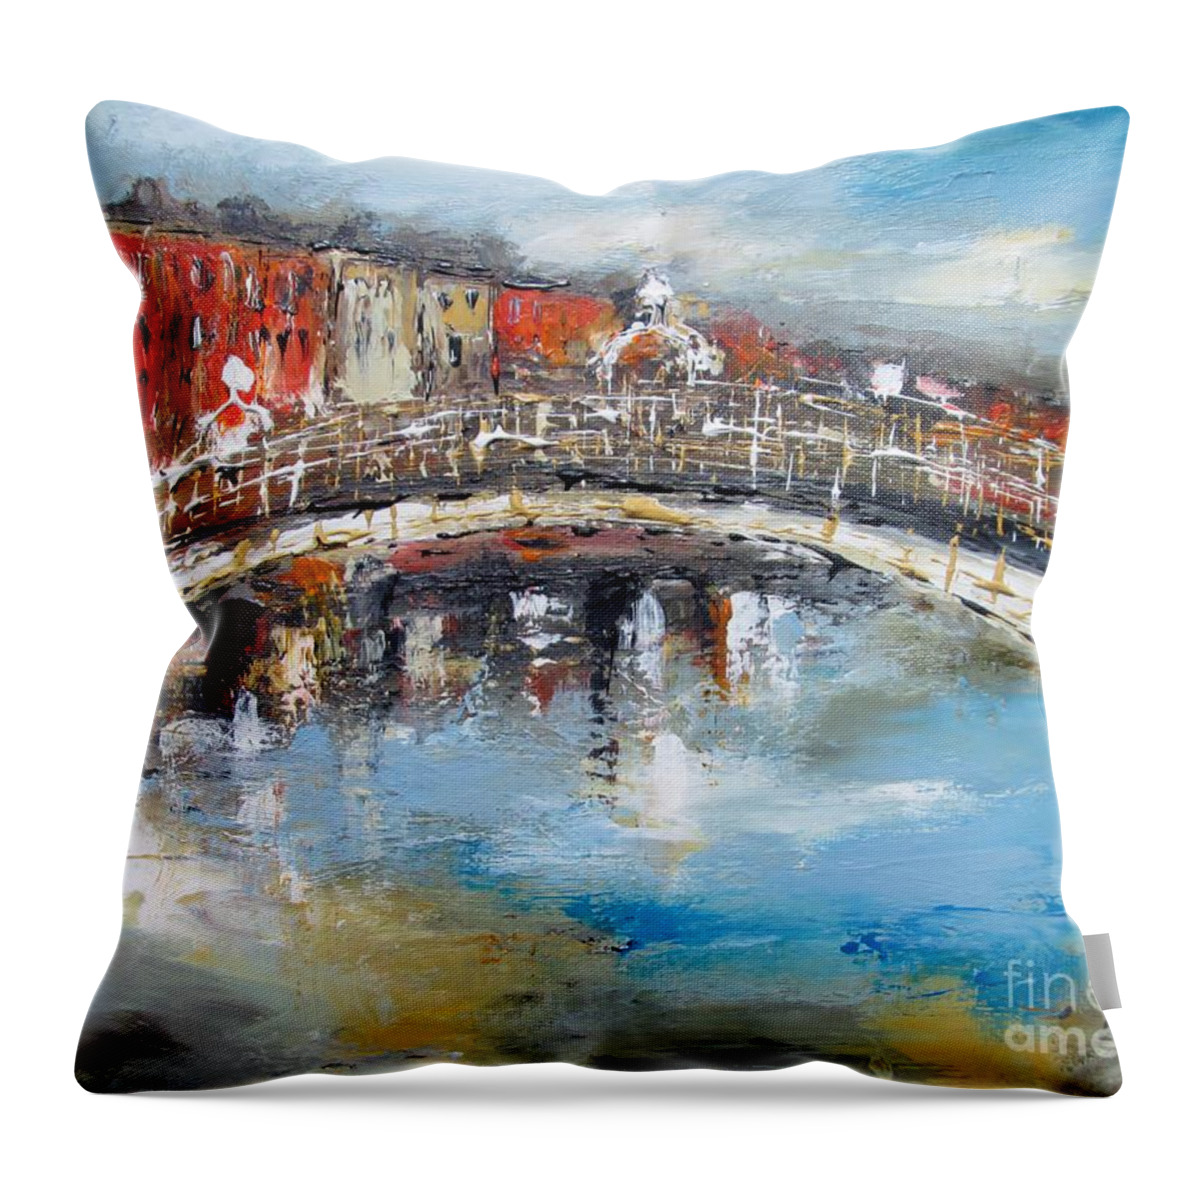 Dublin Bridge Throw Pillow featuring the painting Painting of halfpenny bridge dublin by Mary Cahalan Lee - aka PIXI